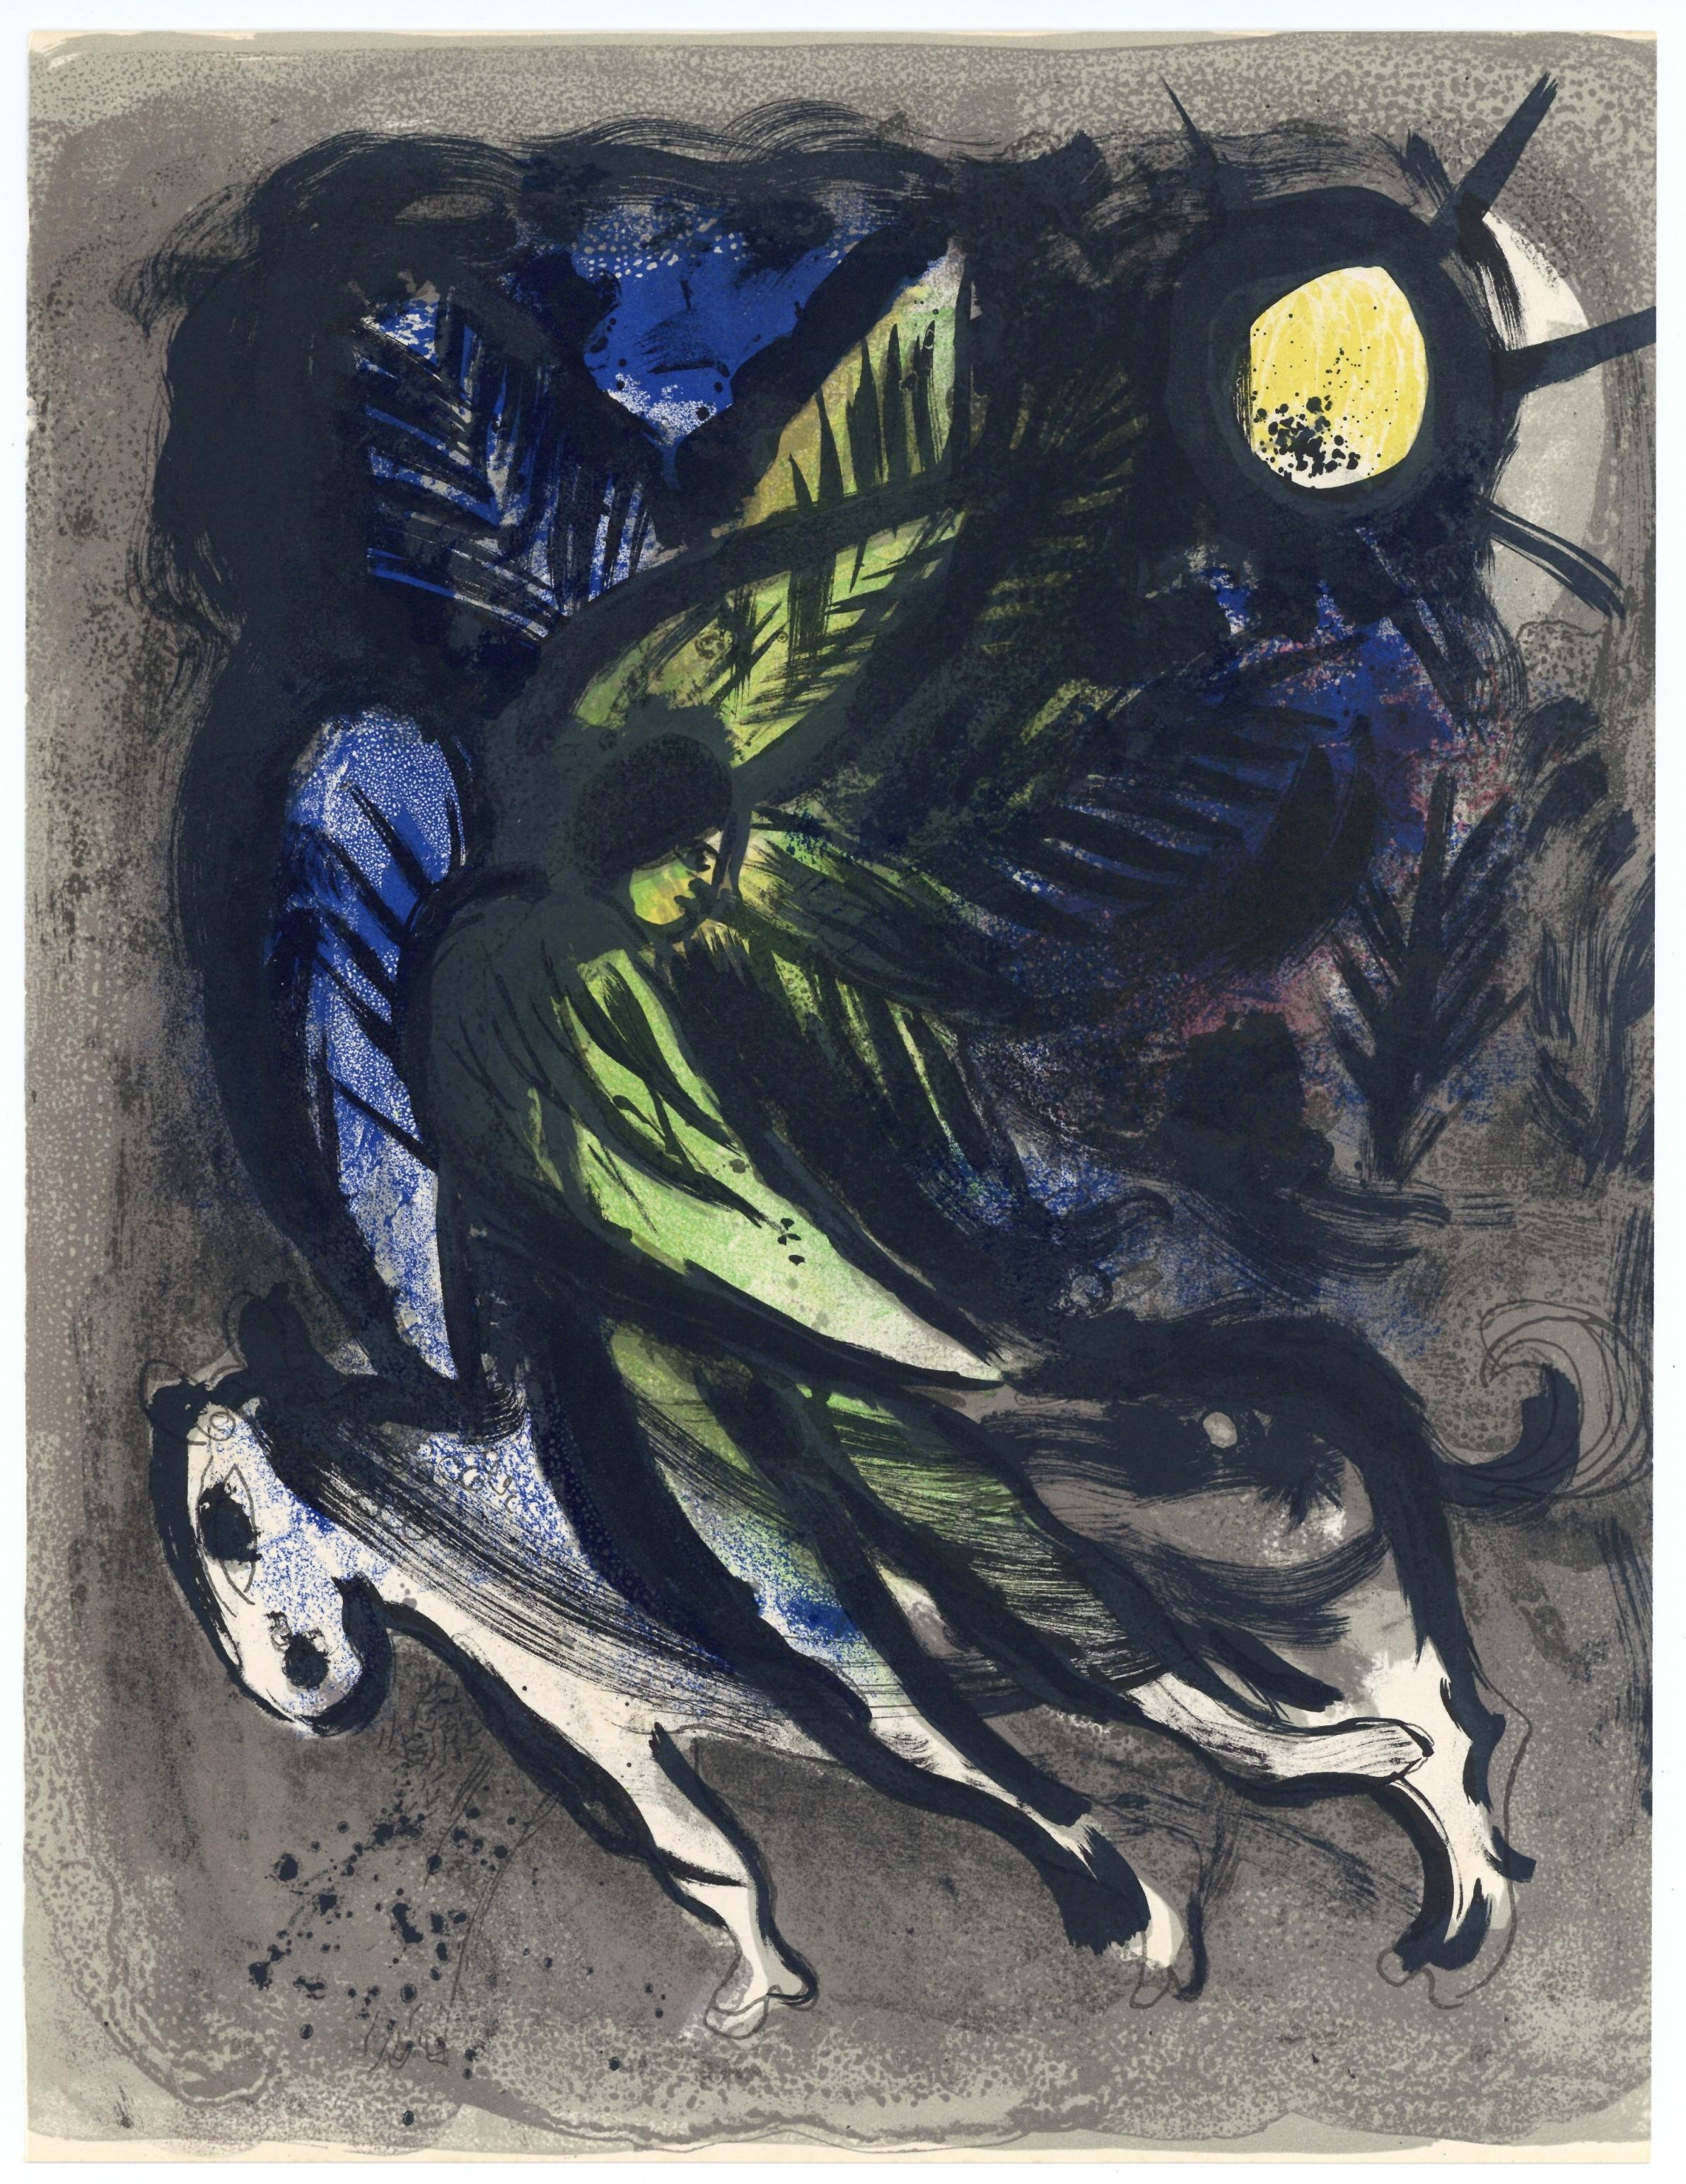 Marc Chagall Portrait Print - "The Angel" original lithograph